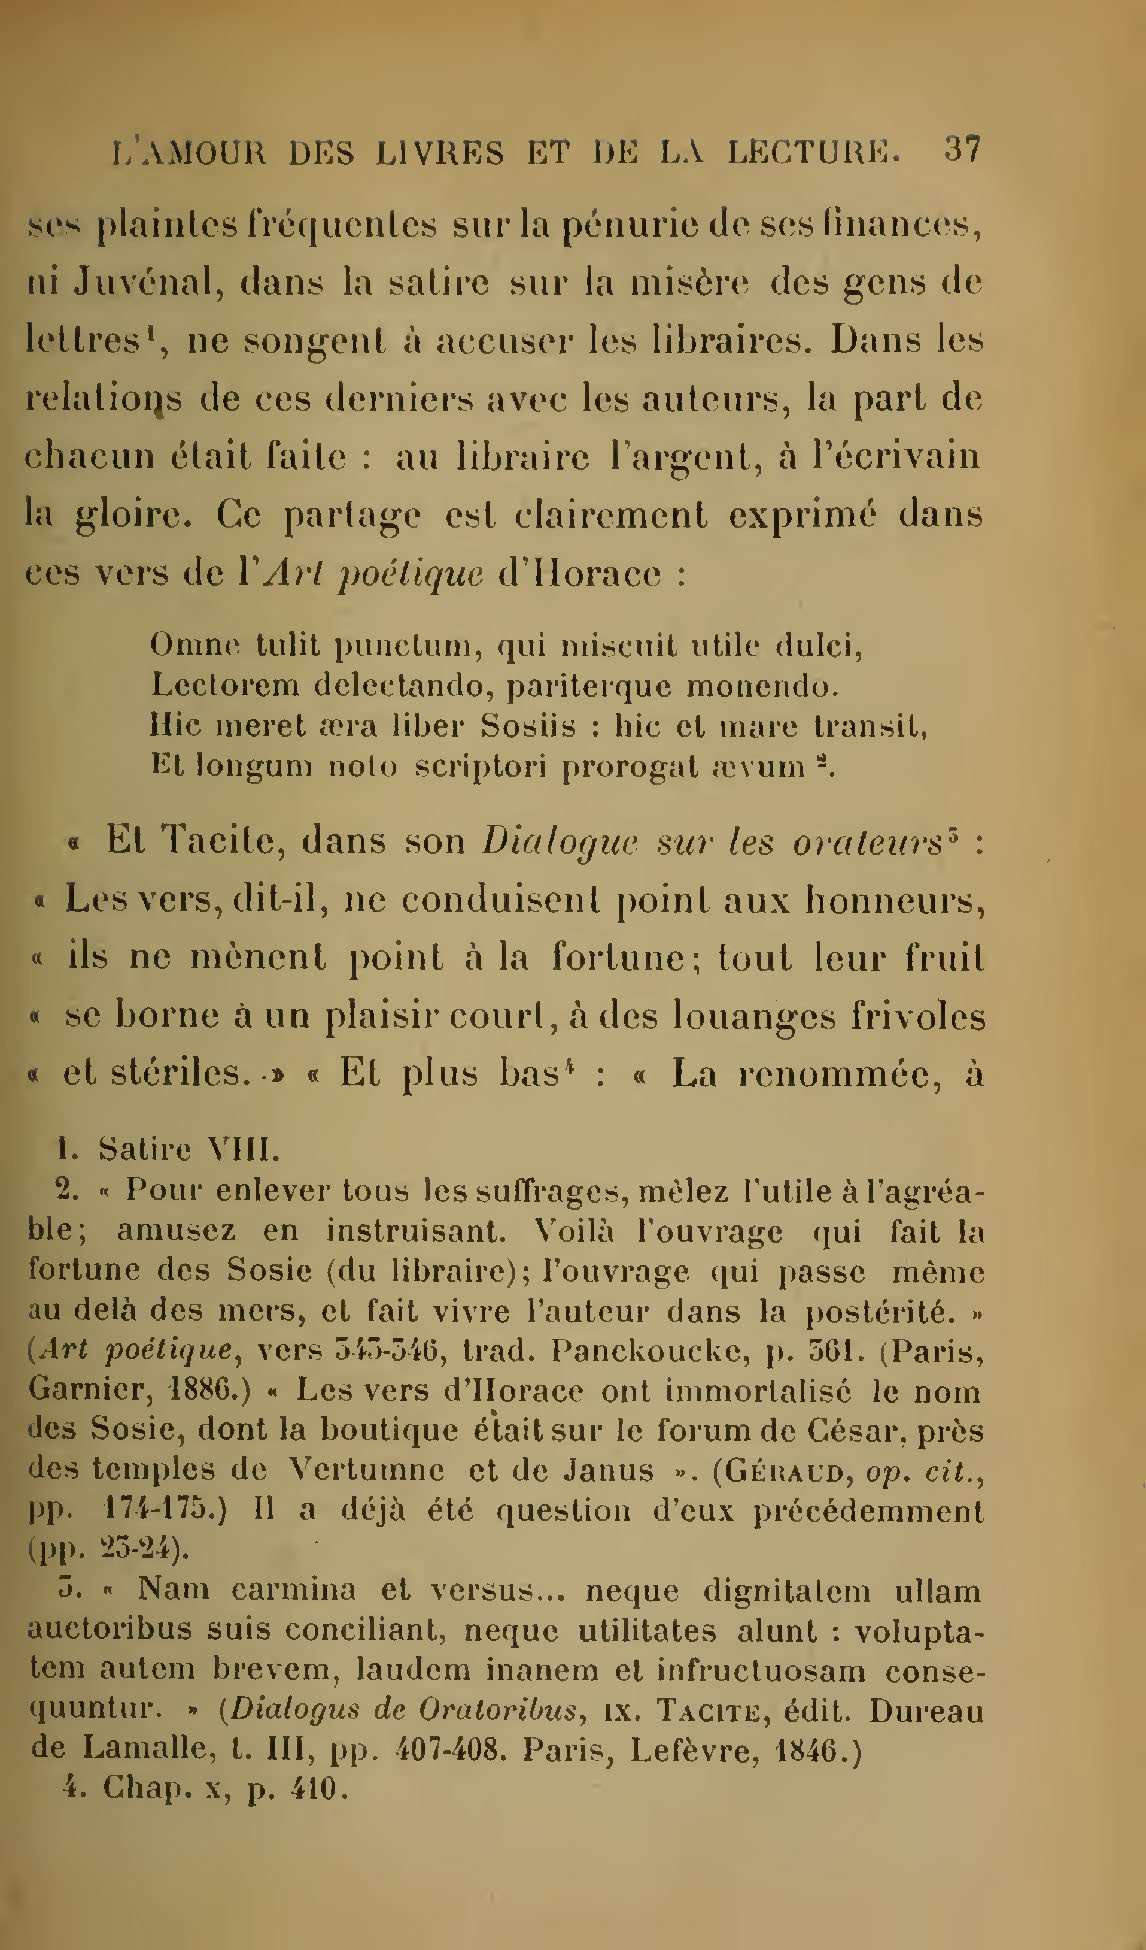 Albert Cim, Le Livre, t. I, p. 37.